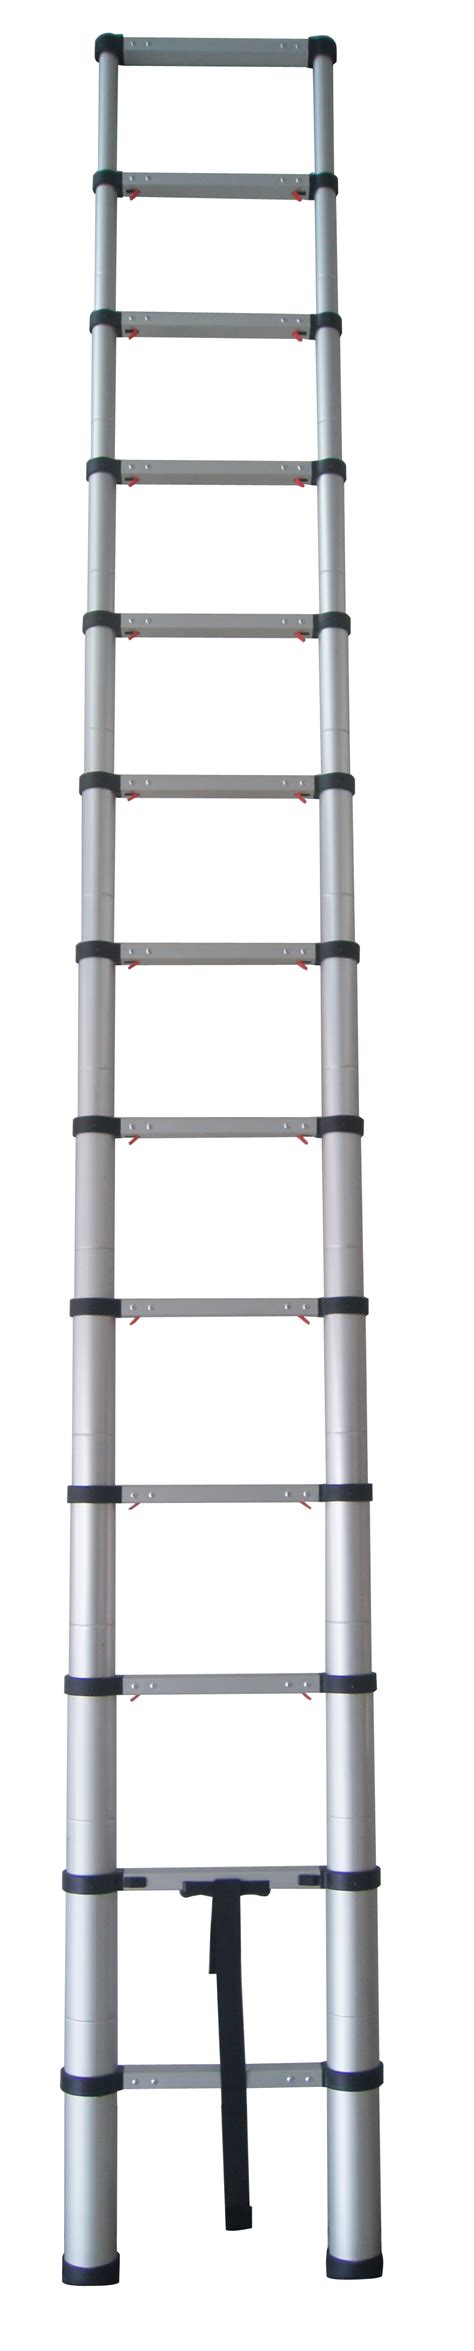 Hitegear - Experts in Height Safety - 3.8M Telescopic Extender Ladder